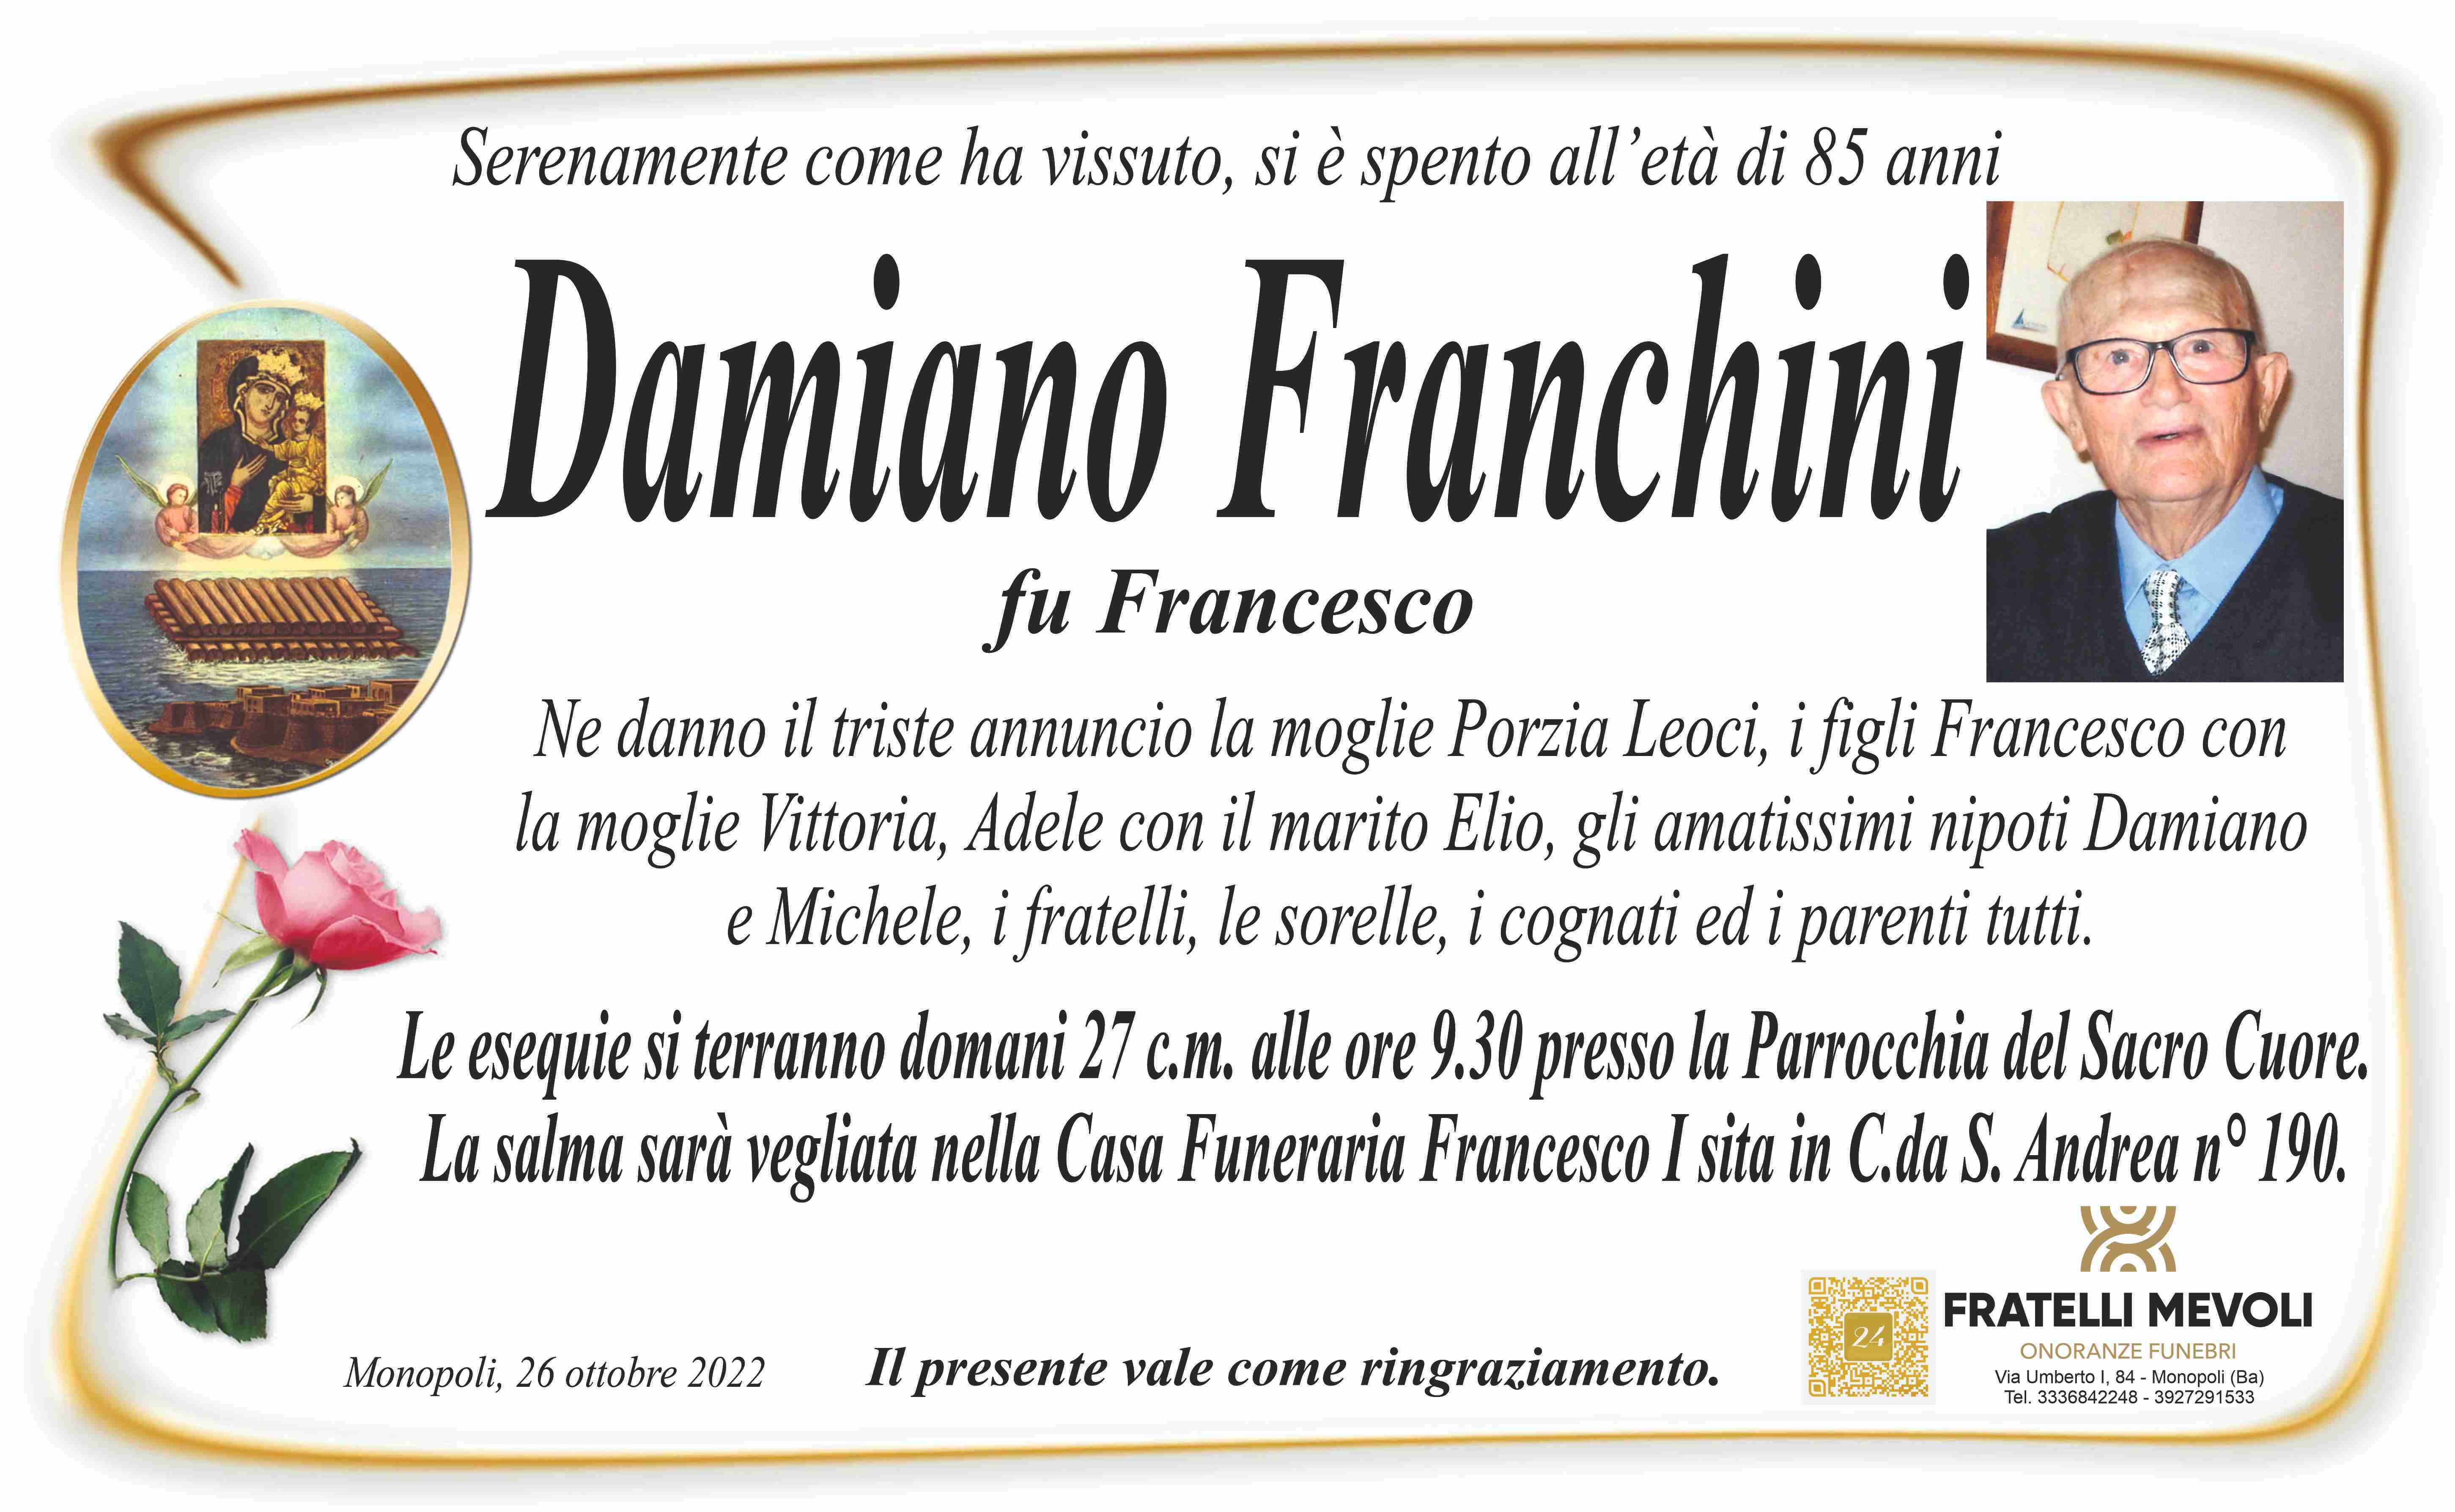 Damiano Franchini